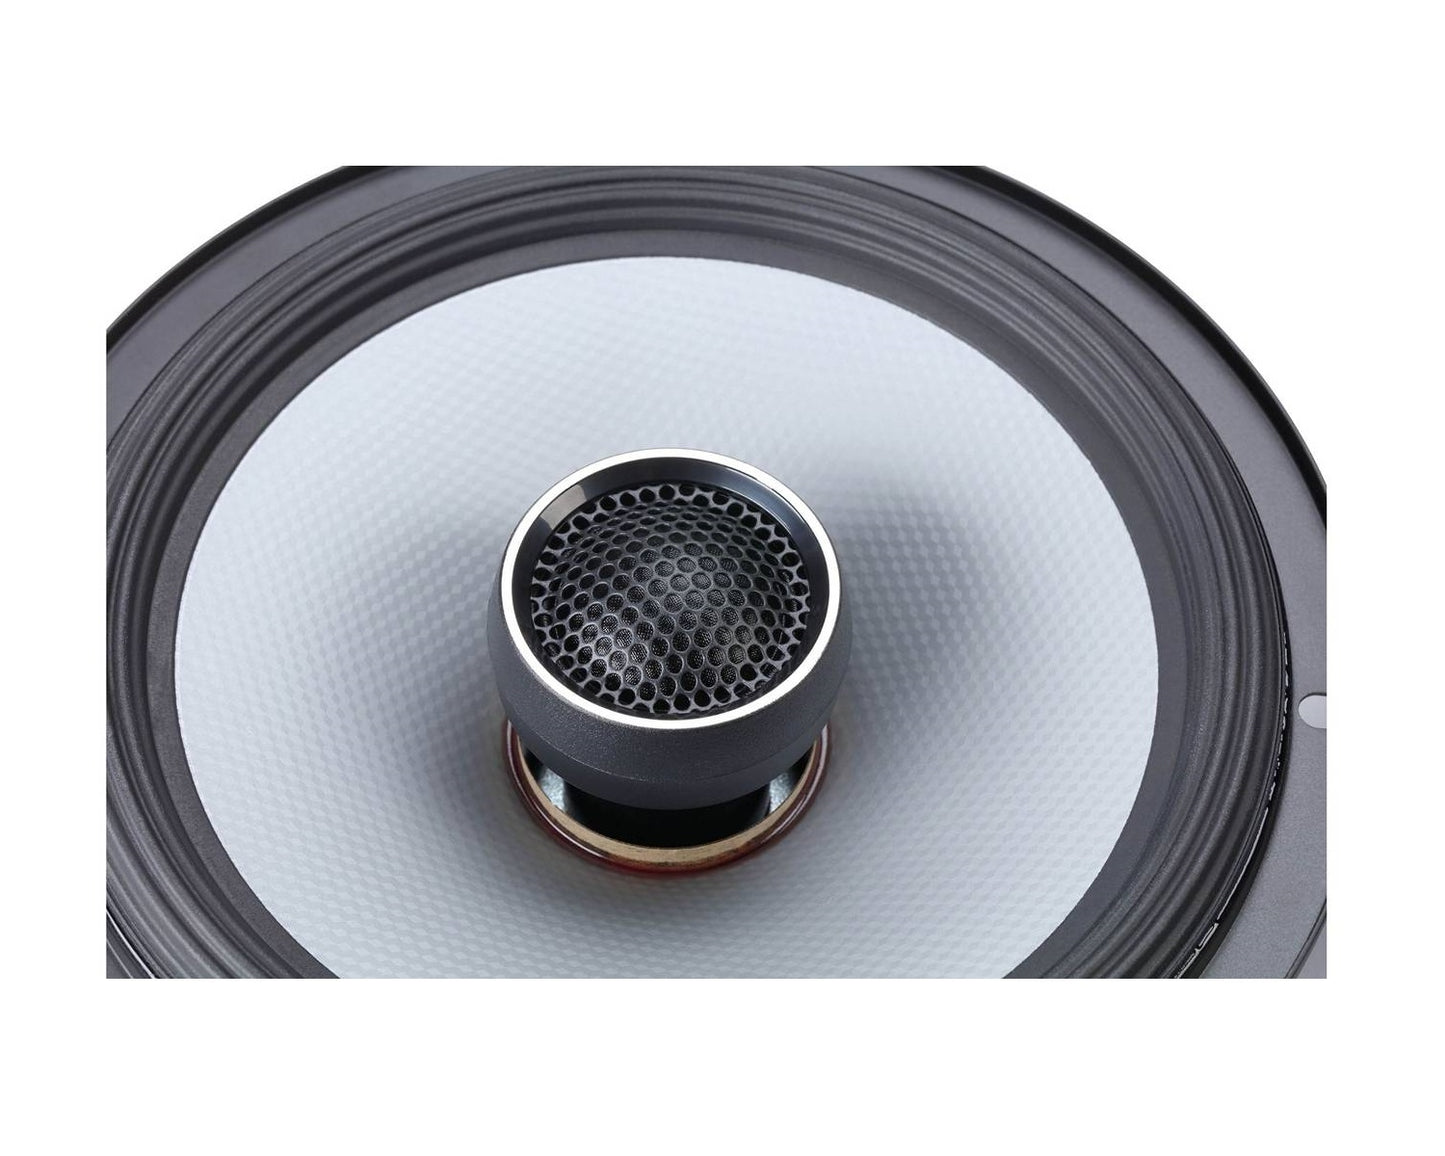 Alpine S2-S65 Next-Generation S-Series 6.5" Coaxial Speakers (80W RMS 240W Peak)